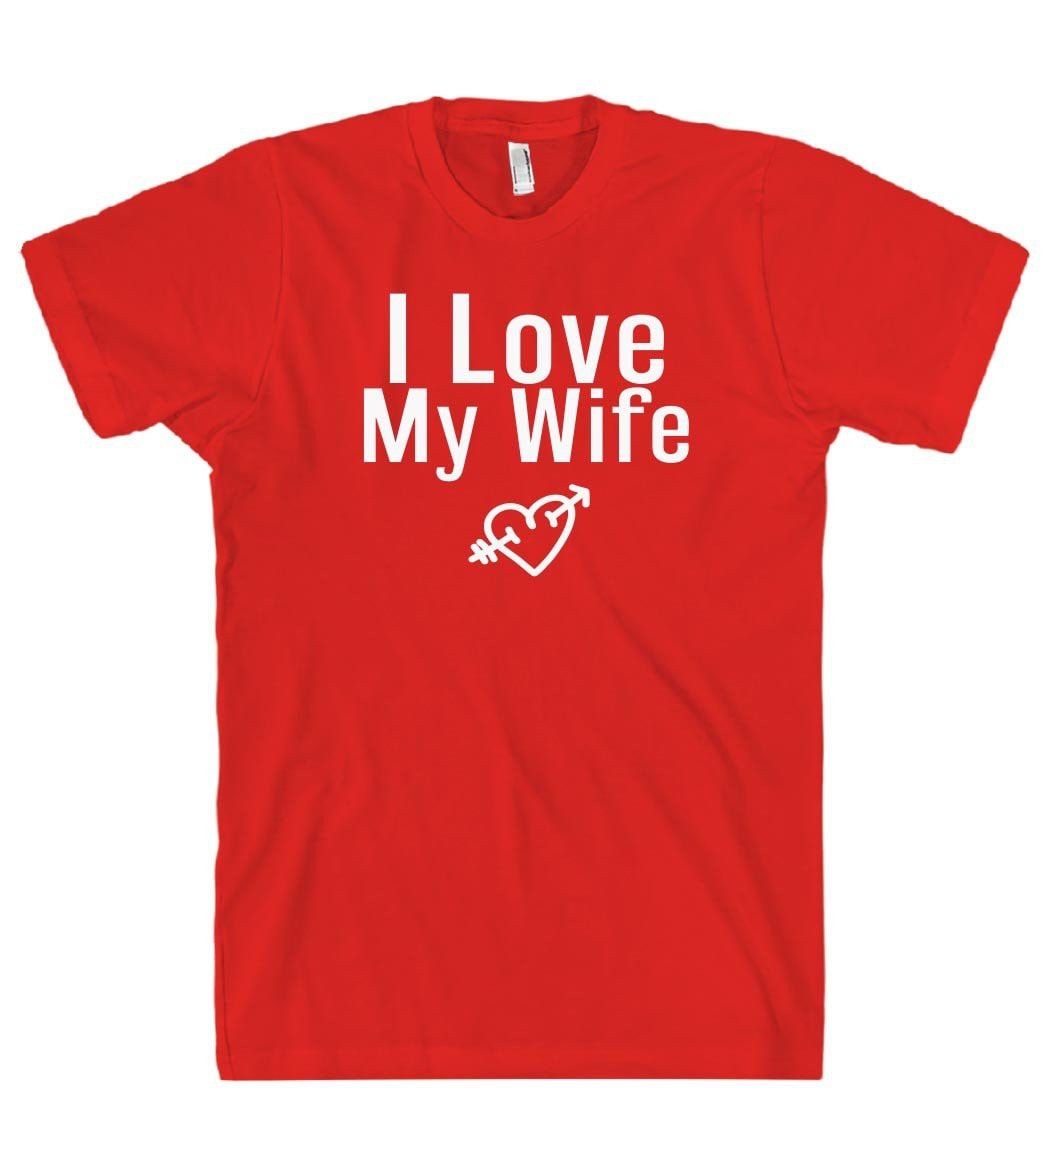 I Love My Wife t shirt - Shirtoopia